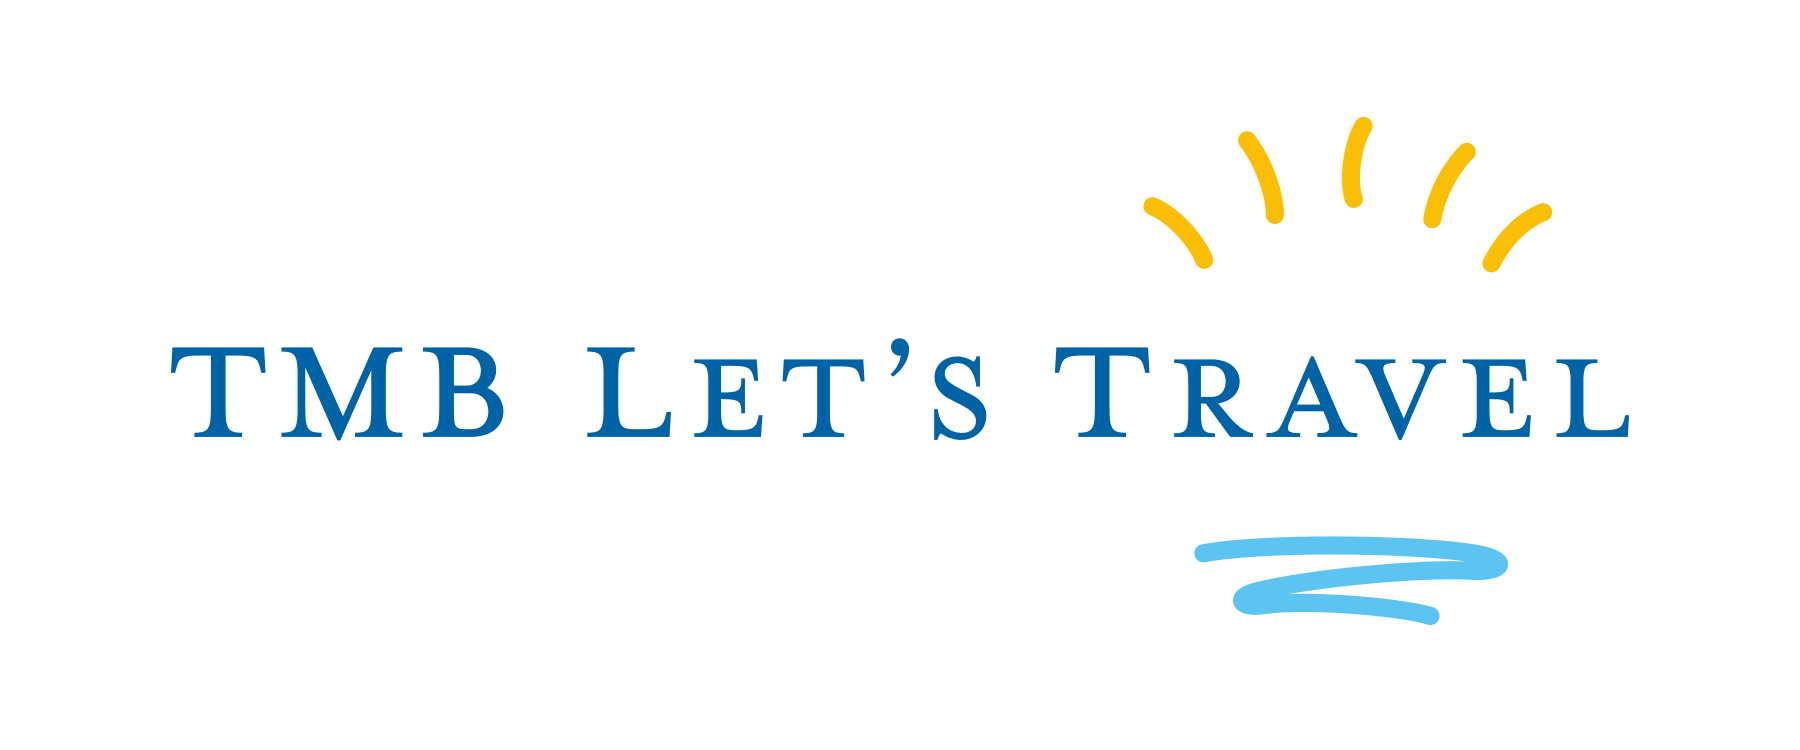 TMB Let's Travel Logo - high resolution